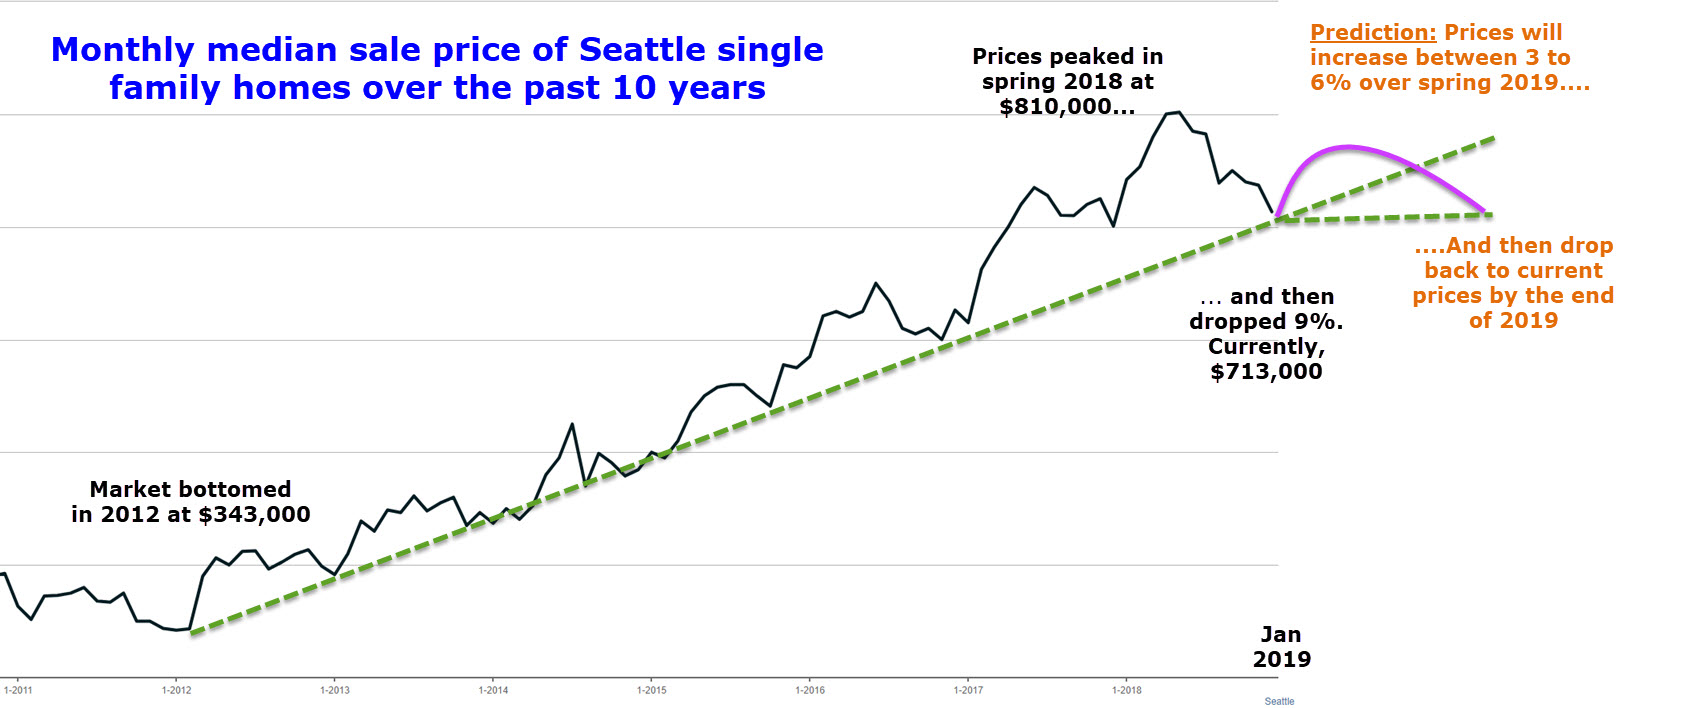 Seattle real estate market prediction for 2019